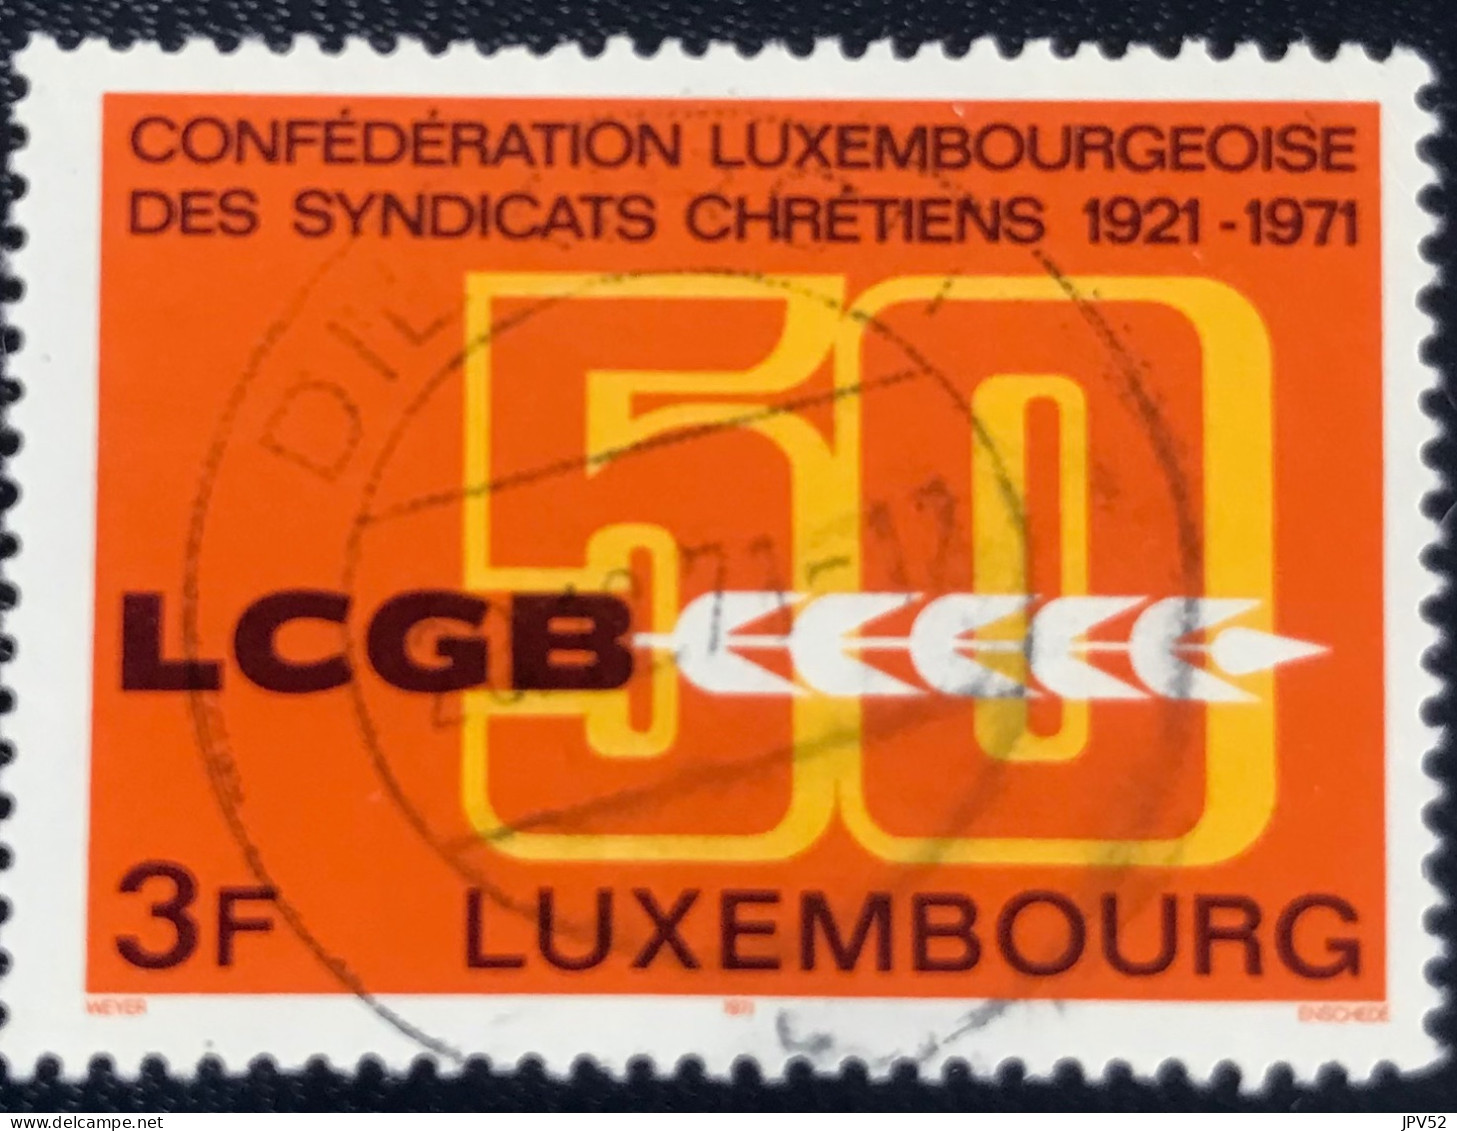 Luxembourg - Luxemburg - C18/31 - 1971 - (°)used - Michel 827 - LCGB Embleem - Oblitérés